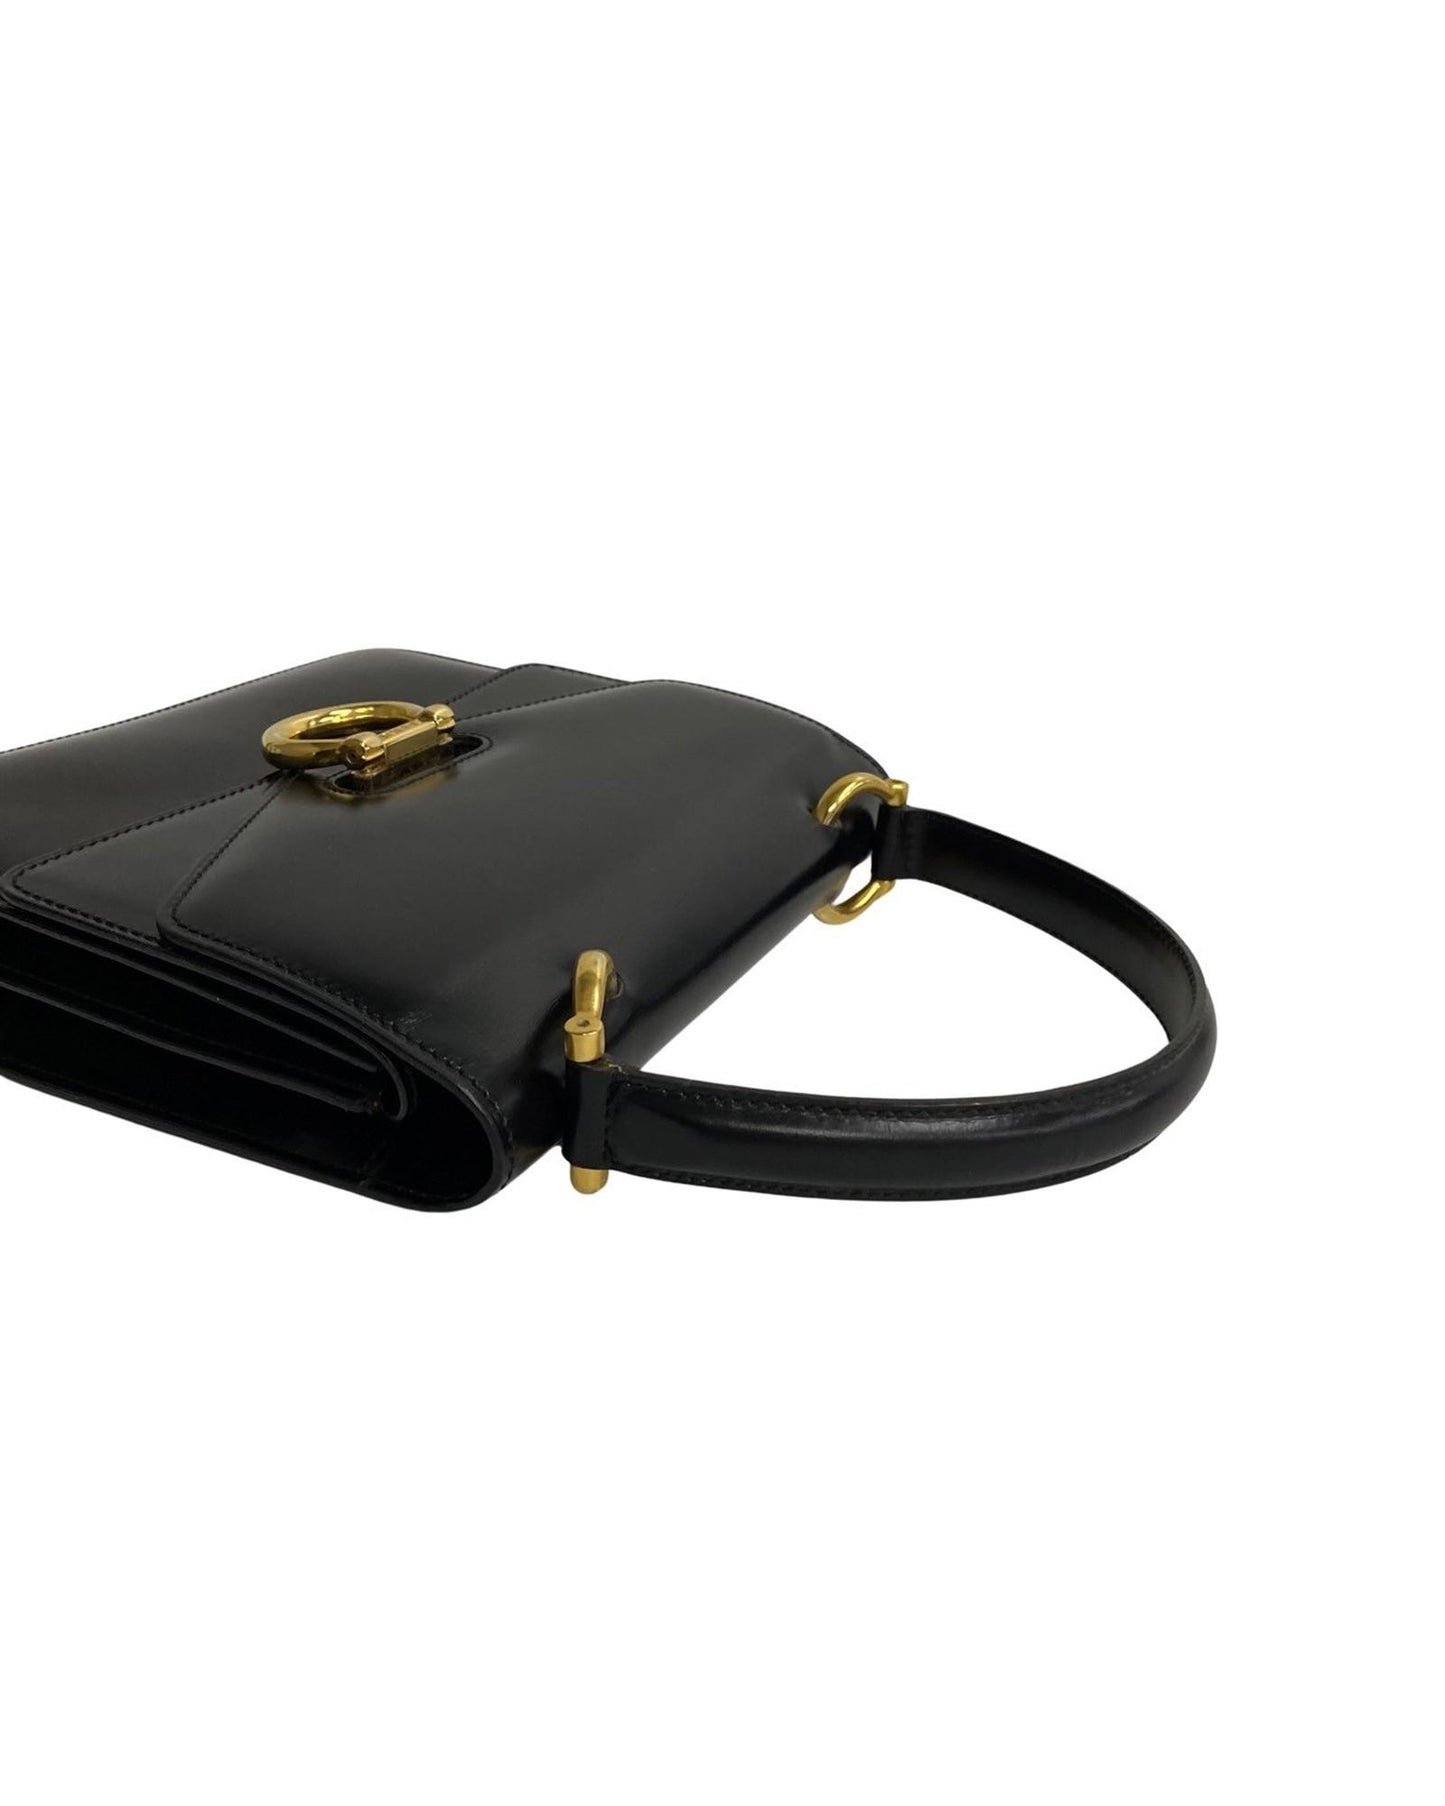 Celine Women's Black Leather Handbag in Excellent Condition in Black